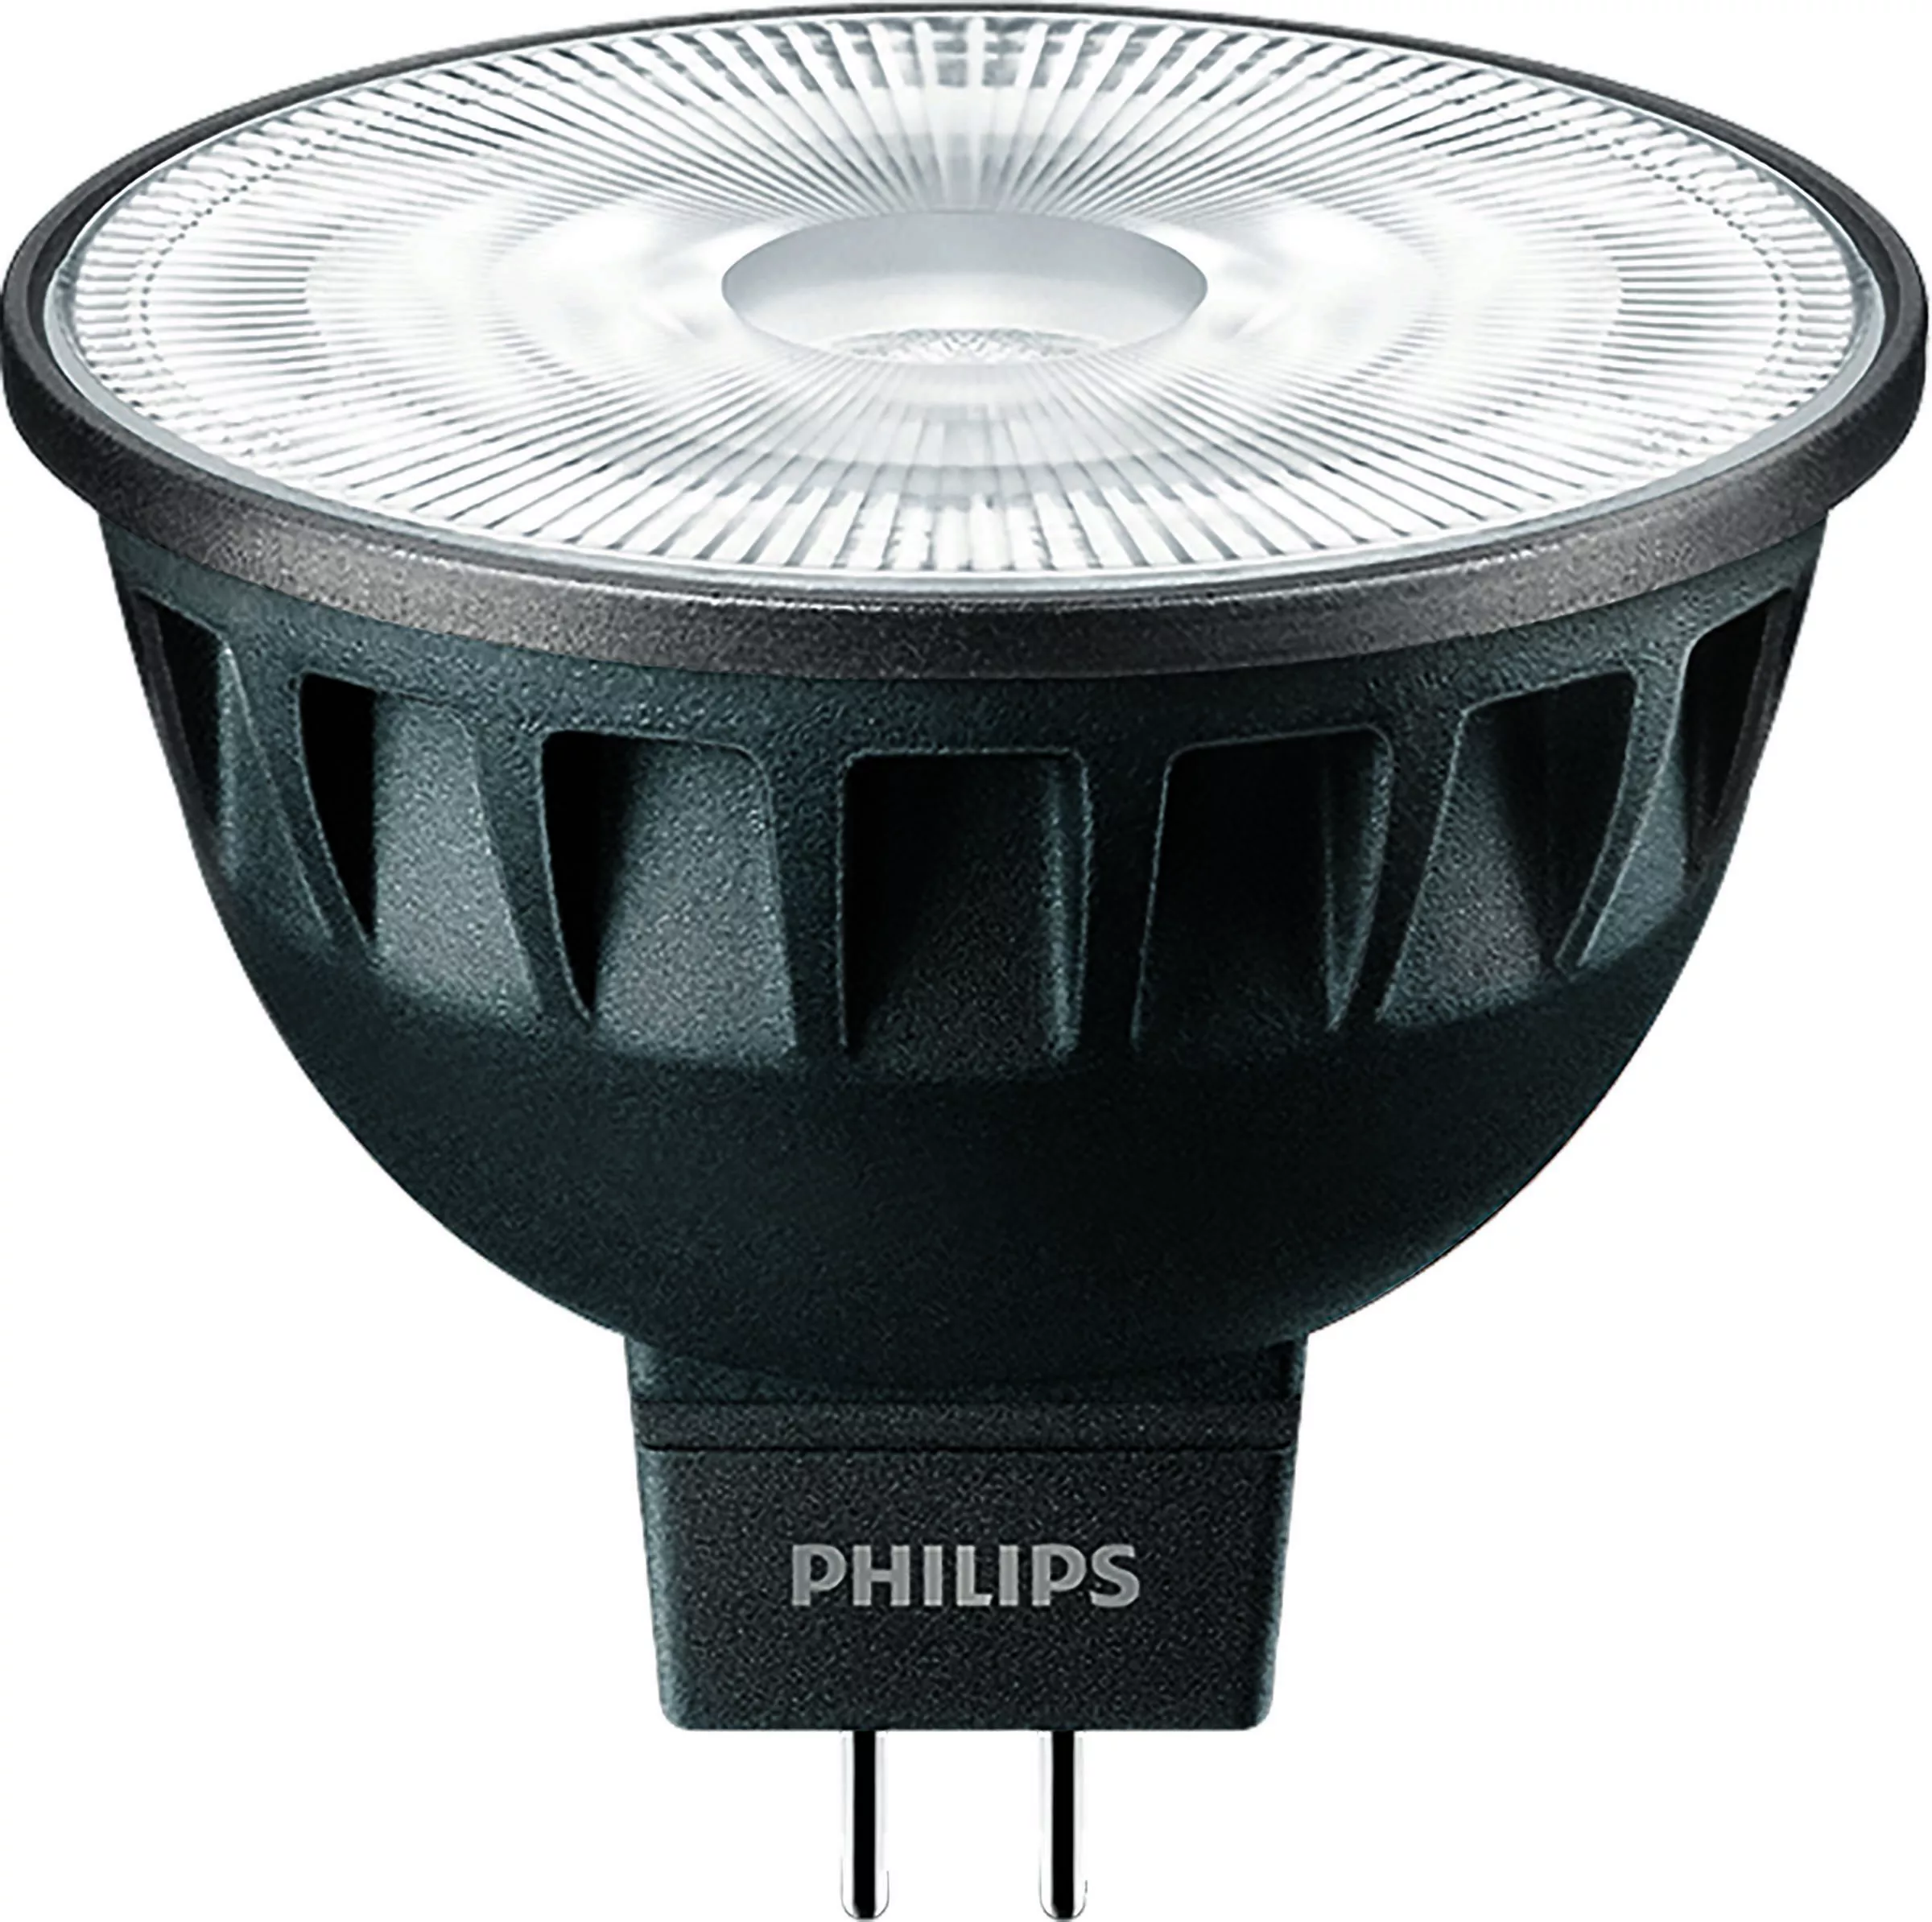 Philips Lighting LED-Reflektorlampr MR16 GU5.3 930 DIM MAS LED Exp#35843000 günstig online kaufen